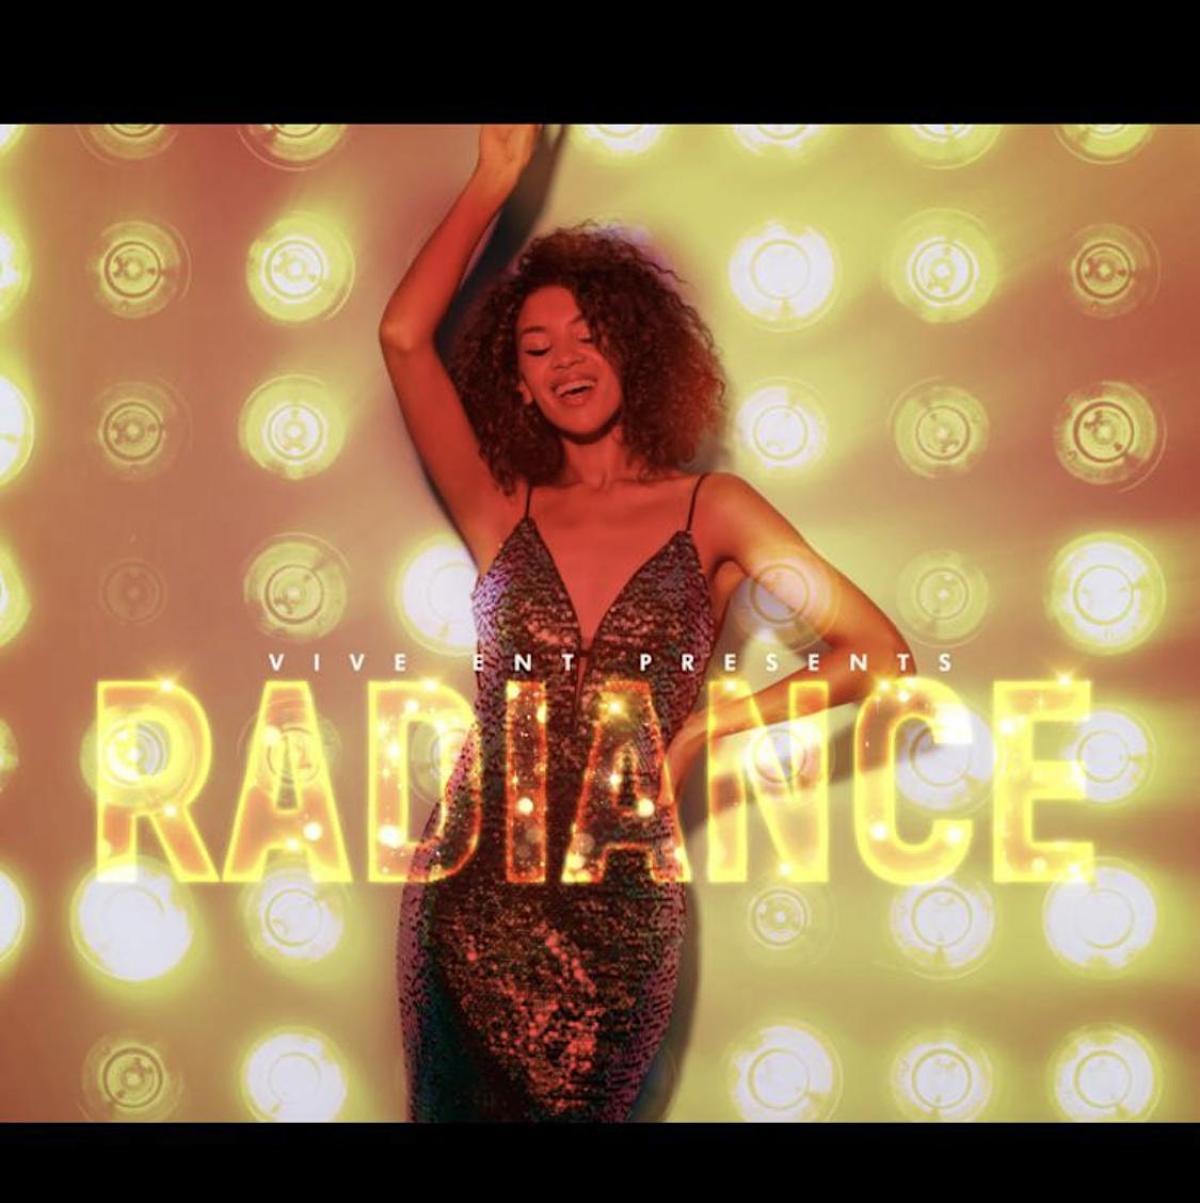 Radiance: Glitz & Glamour flyer or graphic.